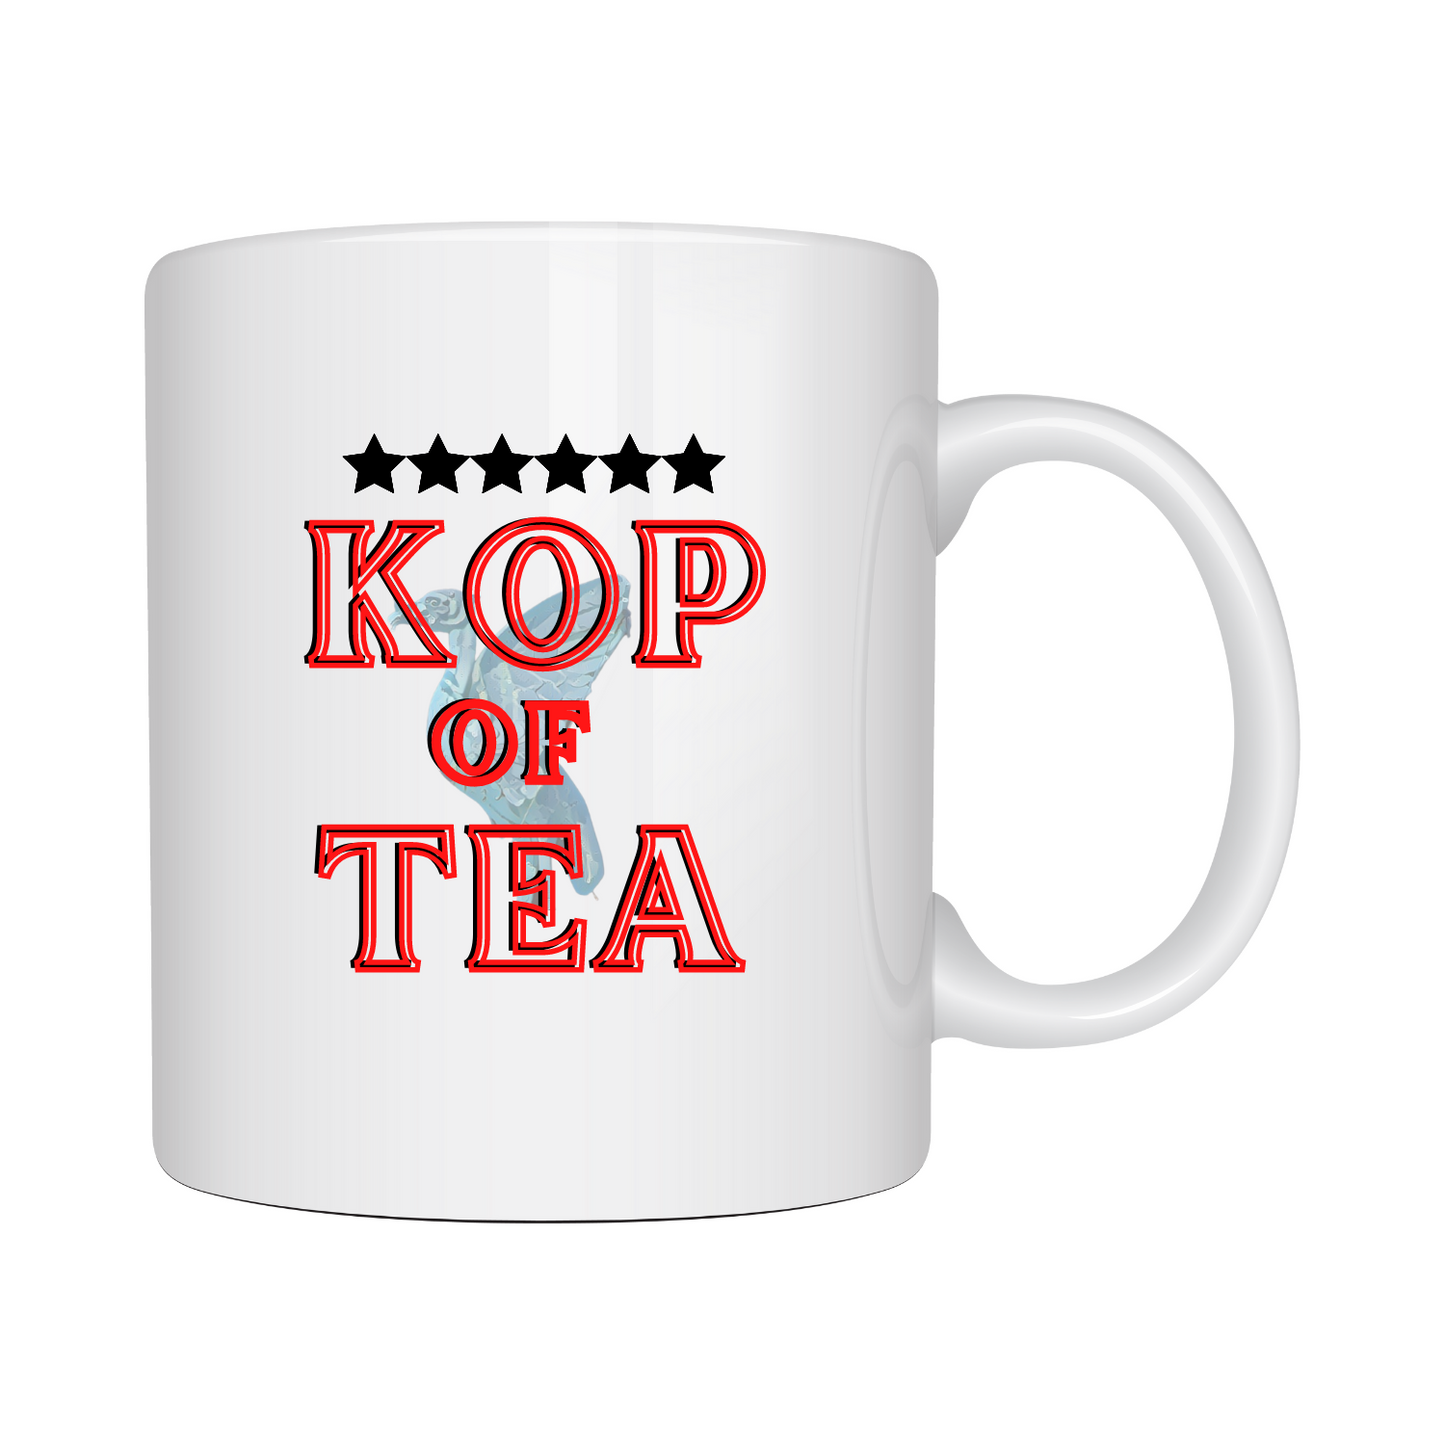 Kop Of Tea Mug